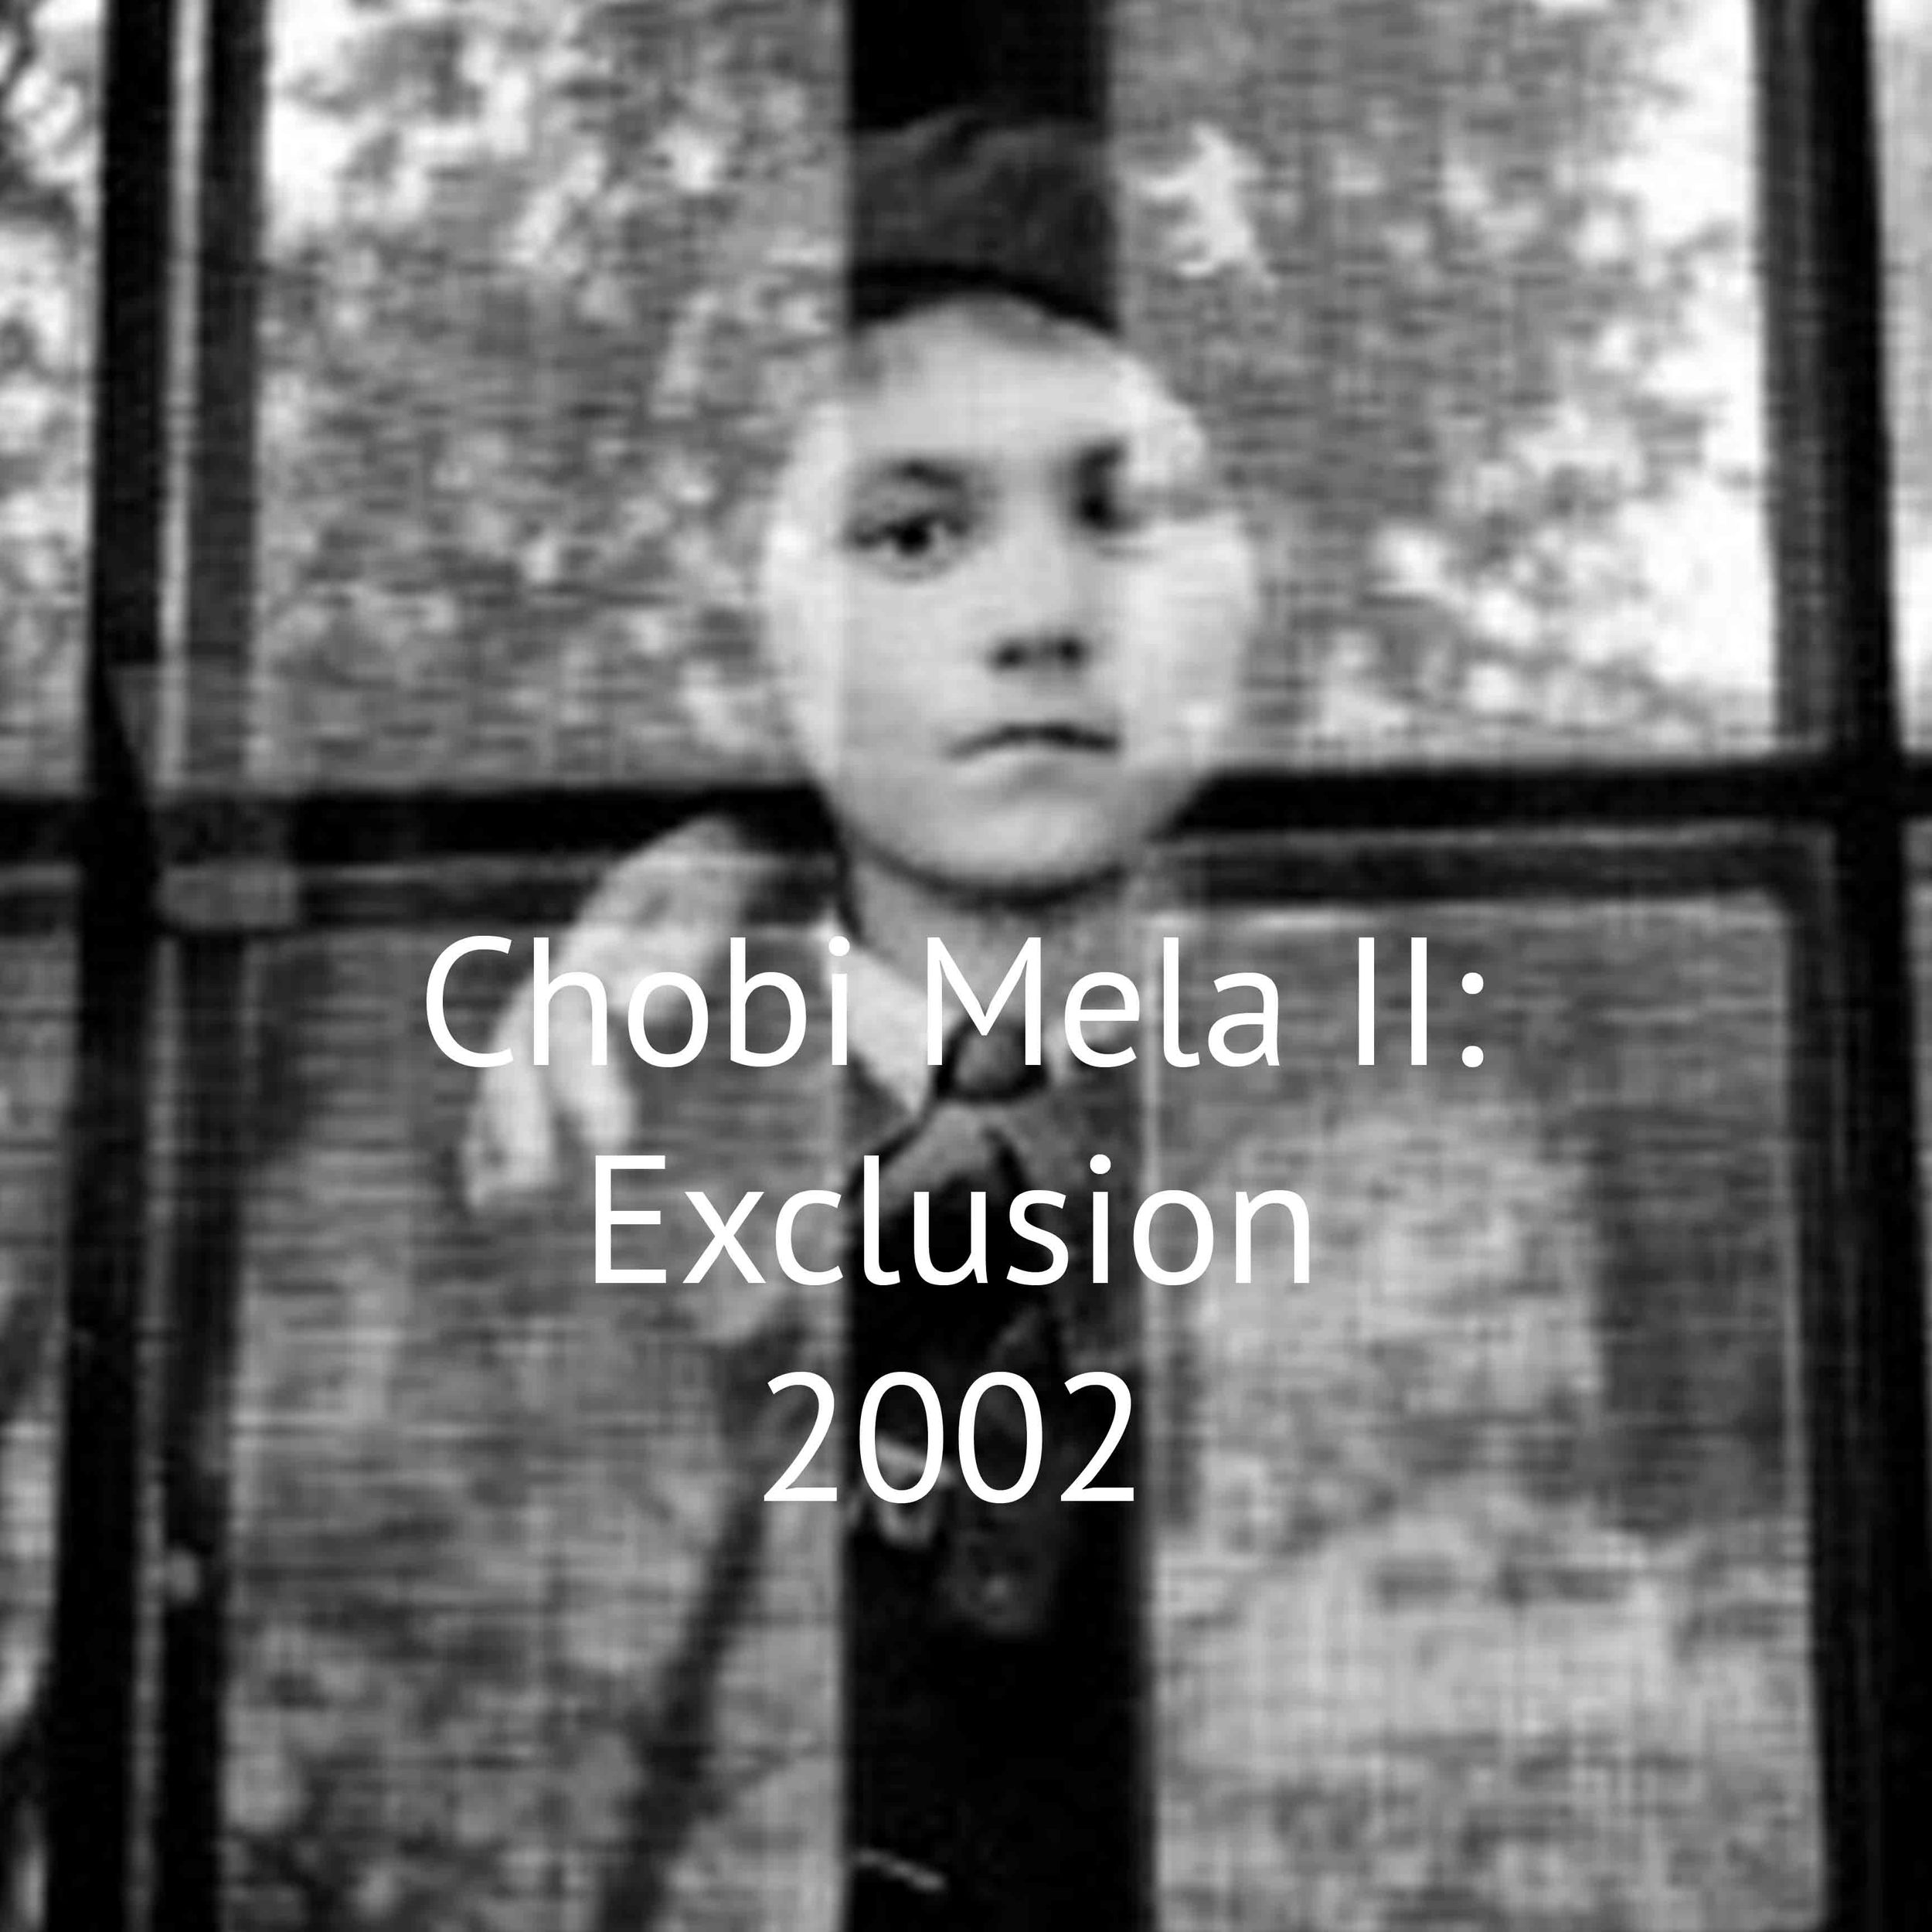 Chobi Mela II: Exclusion